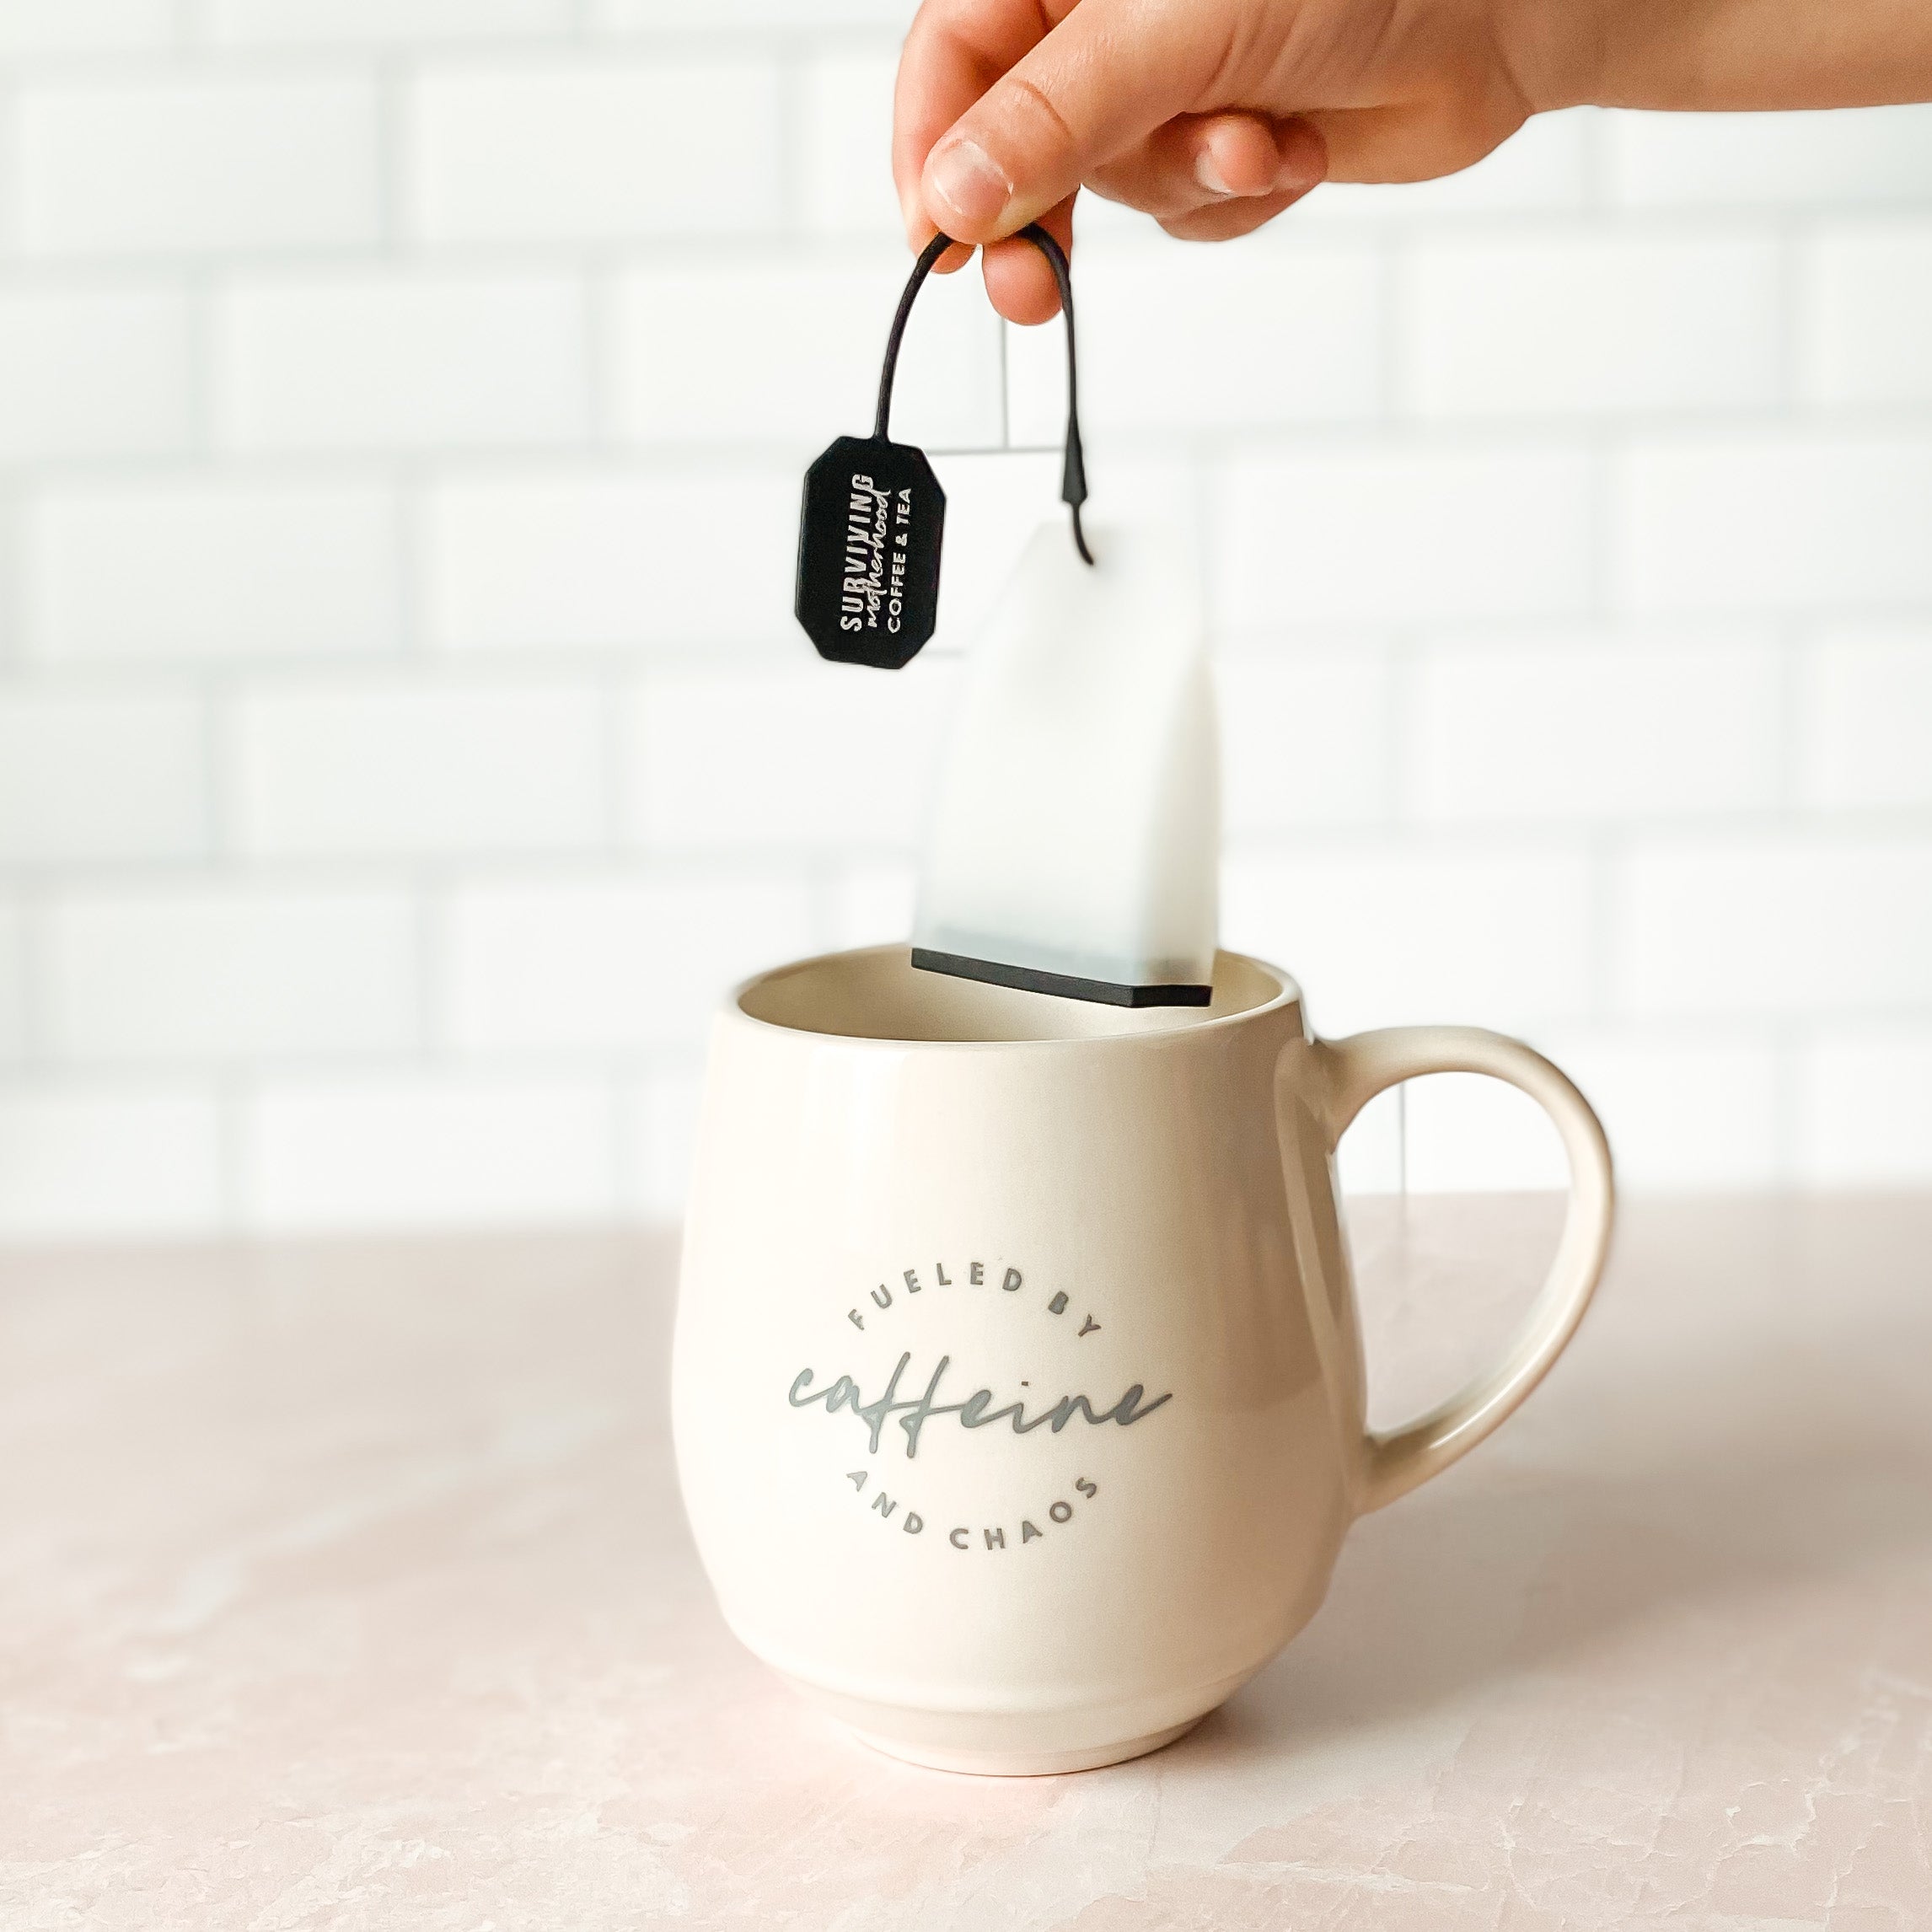 Reusable Silicone Tea Bag - Surviving Motherhood Tea